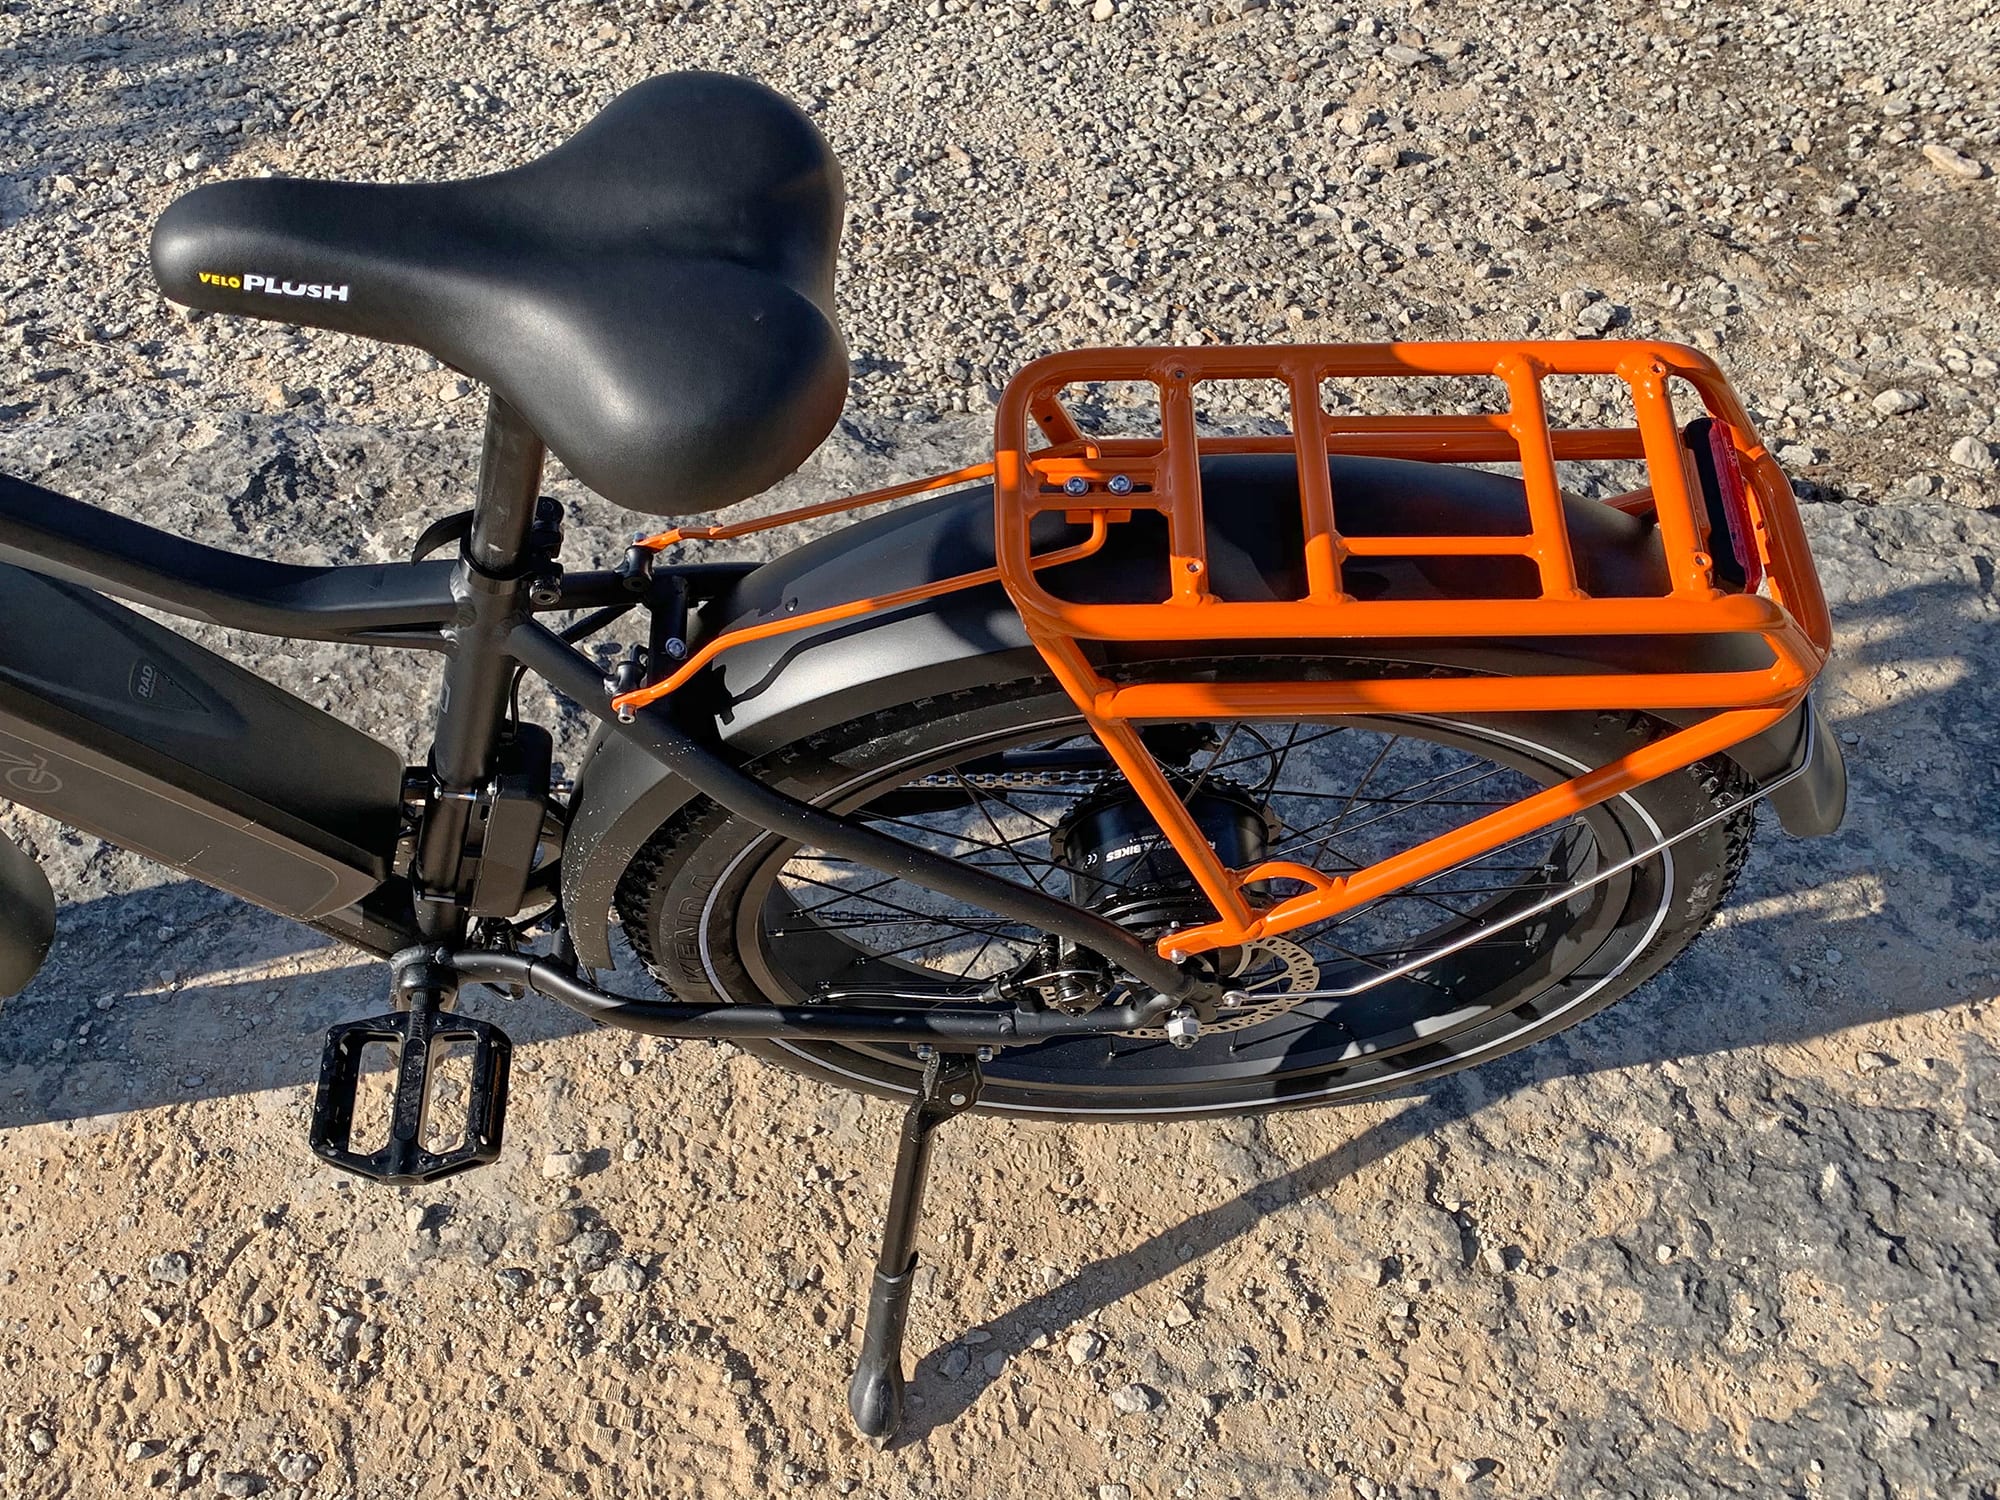 rad electric bike accessories